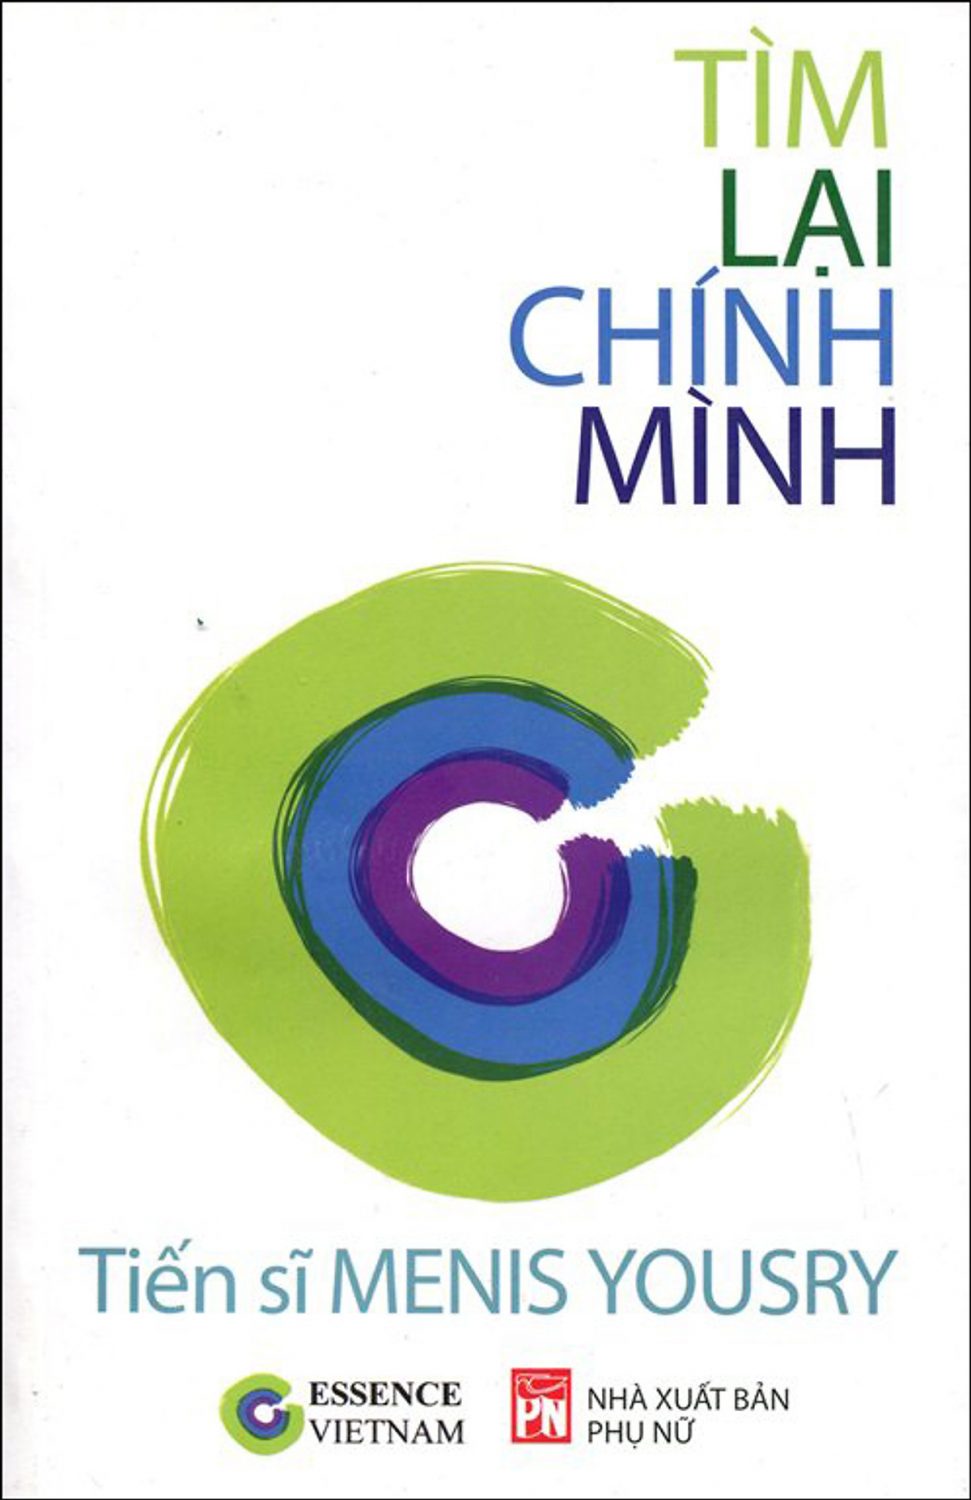 Tim Lai Chinh Minh Scaled